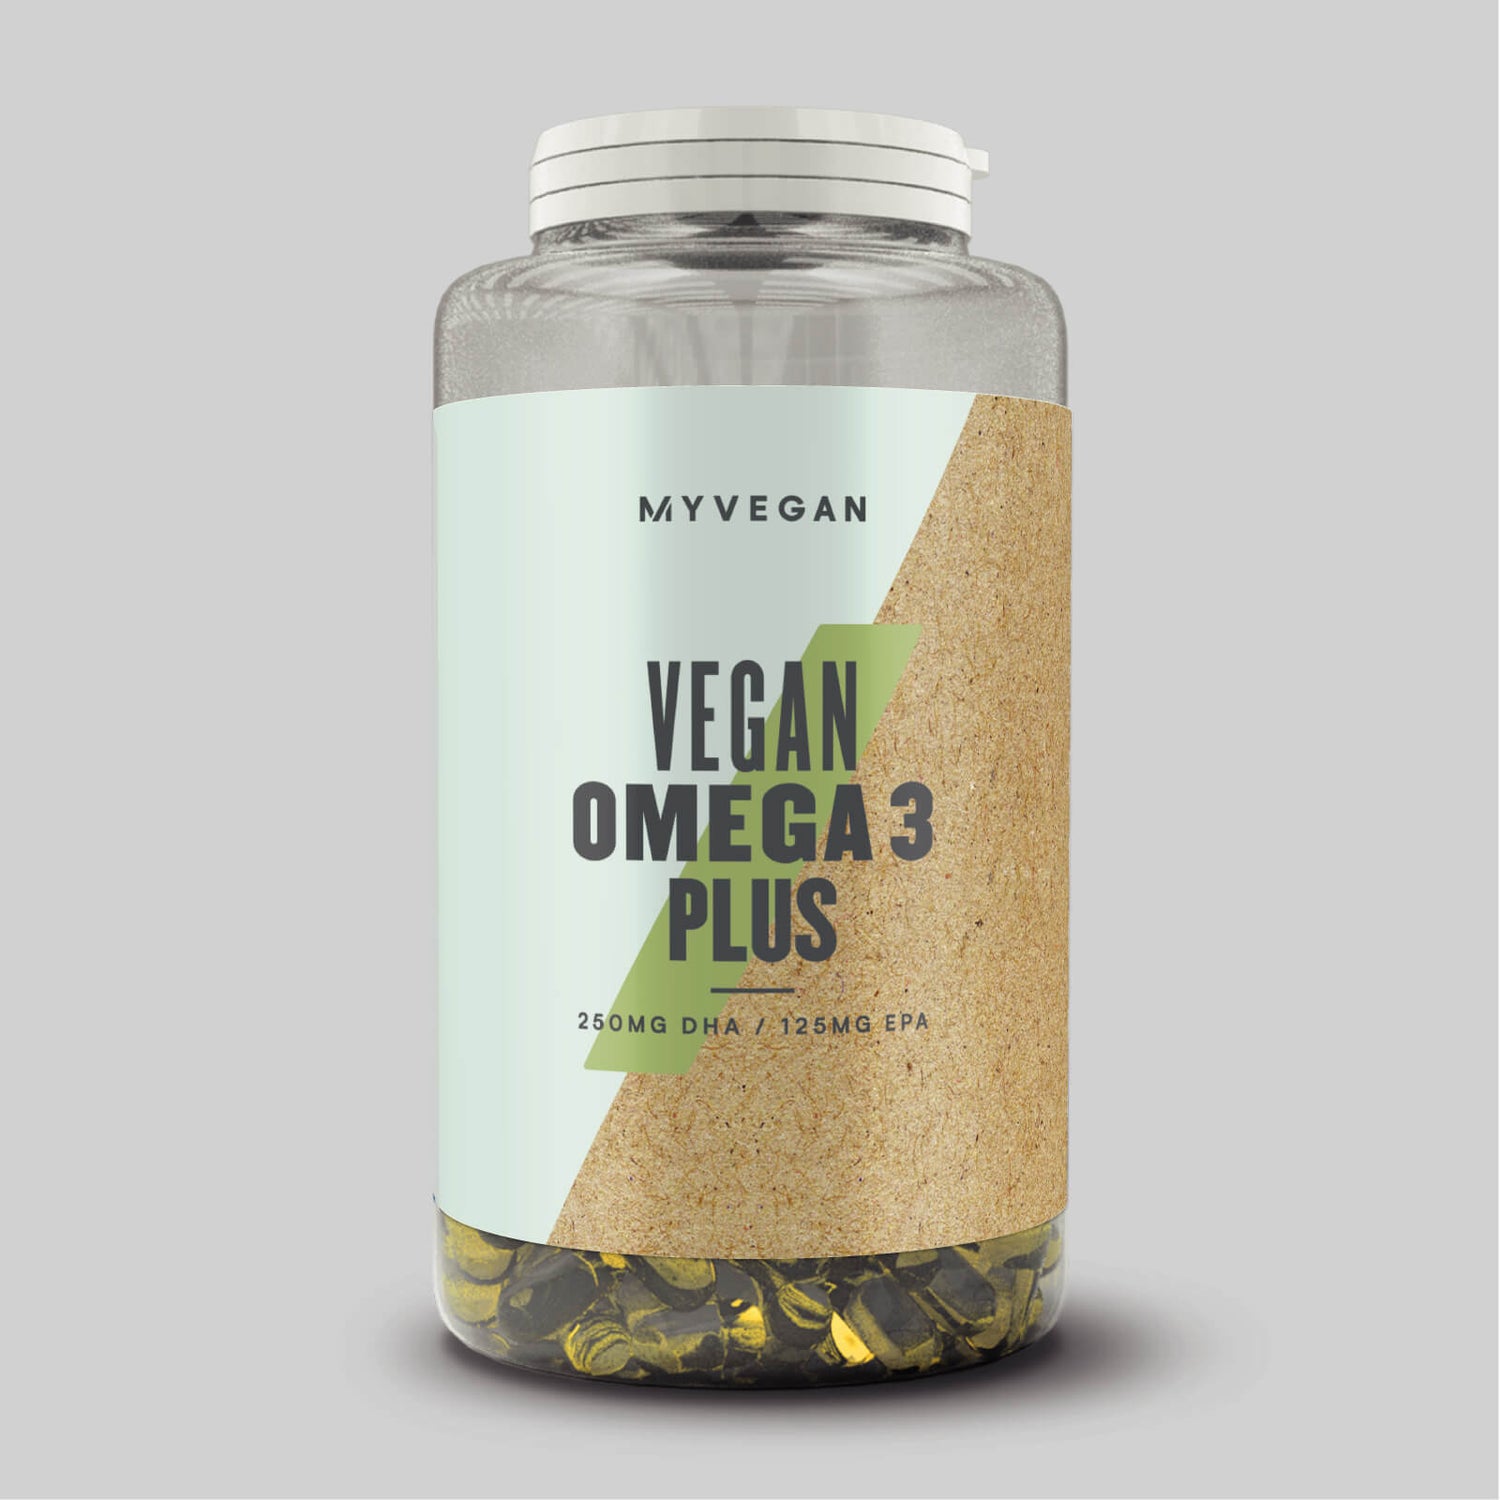 Vegan Omega 3 Plus